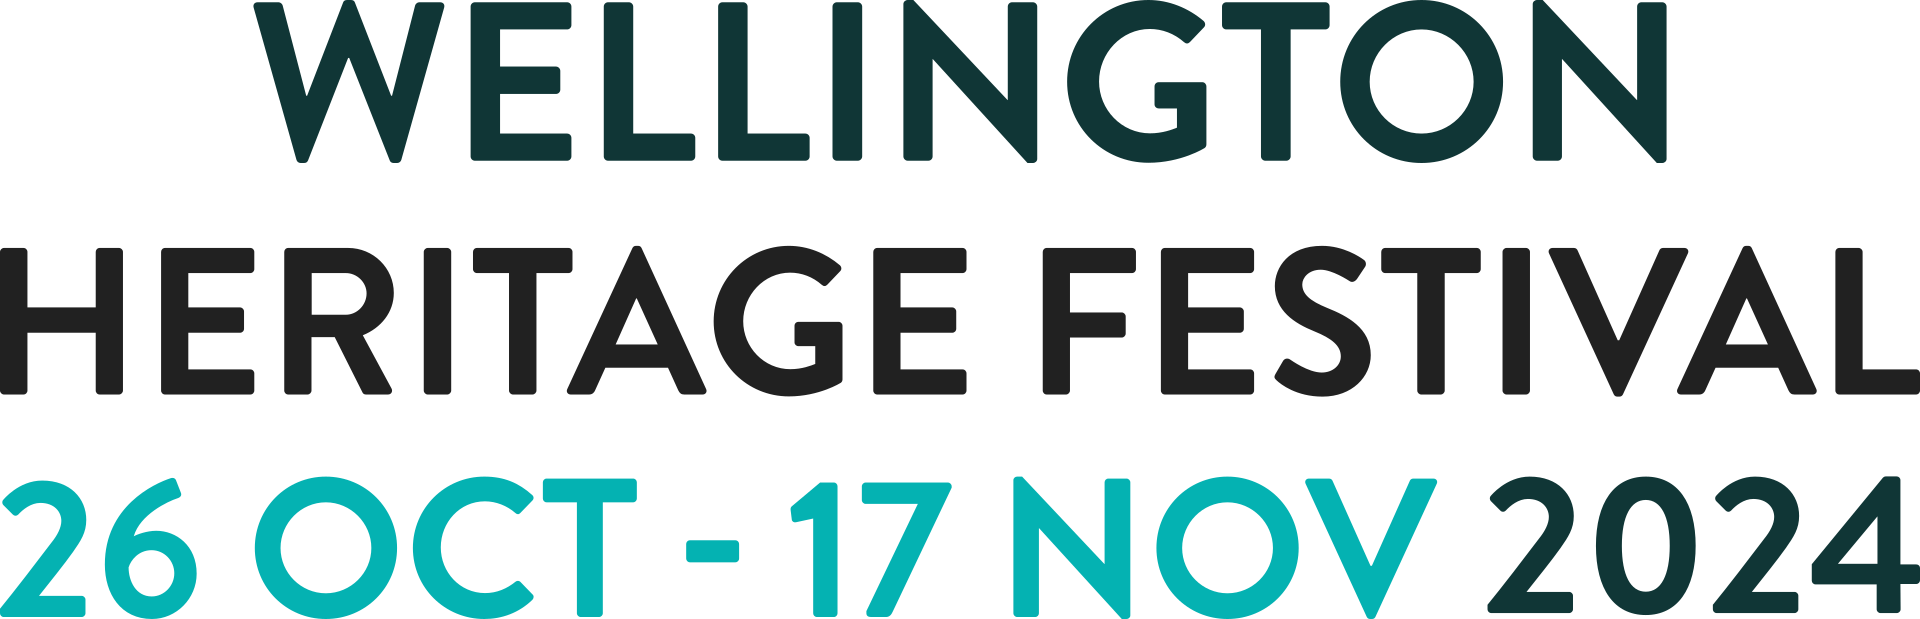 Wellington Heritage Festival 2024, October 26 - November 17